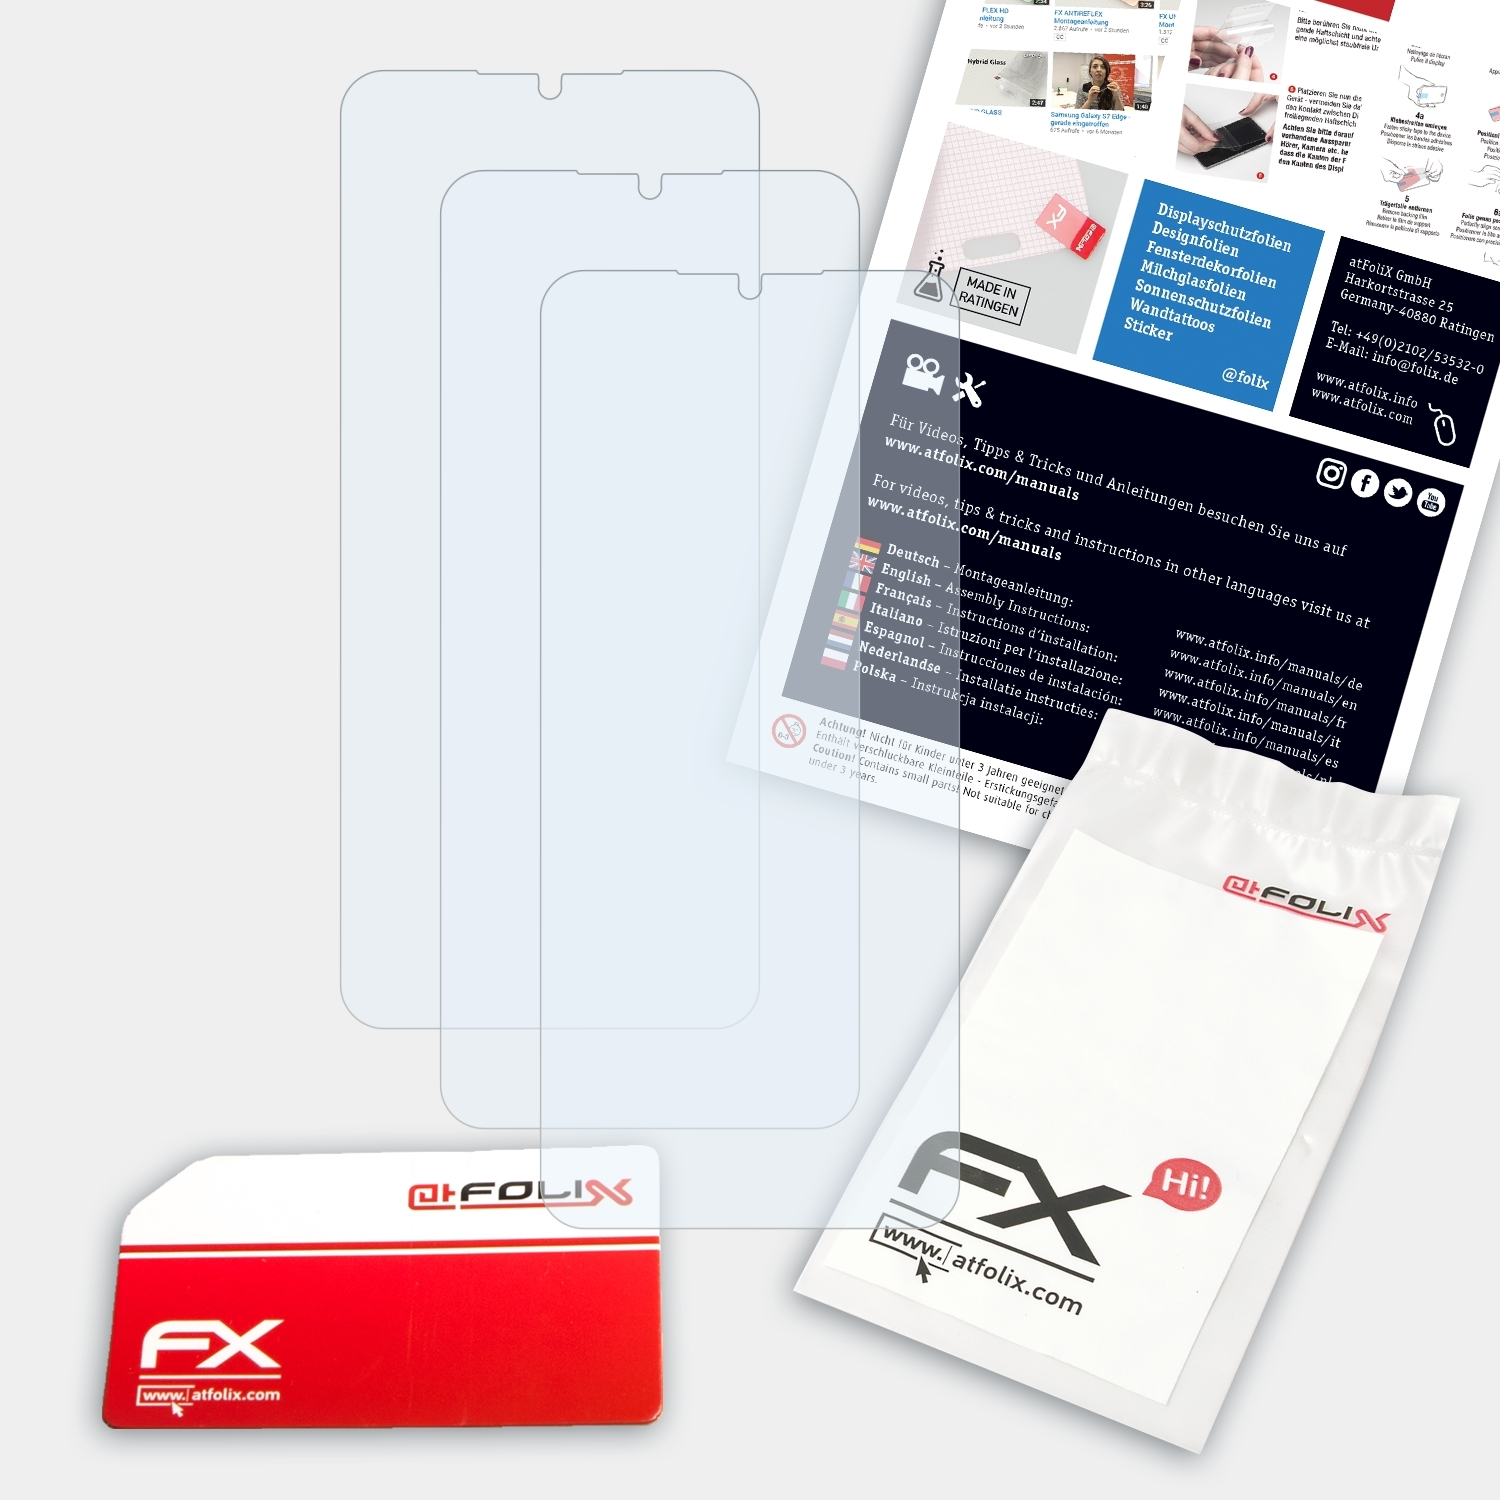 ATFOLIX 3x FX-Clear Pro) A13 UMiDigi Displayschutz(für